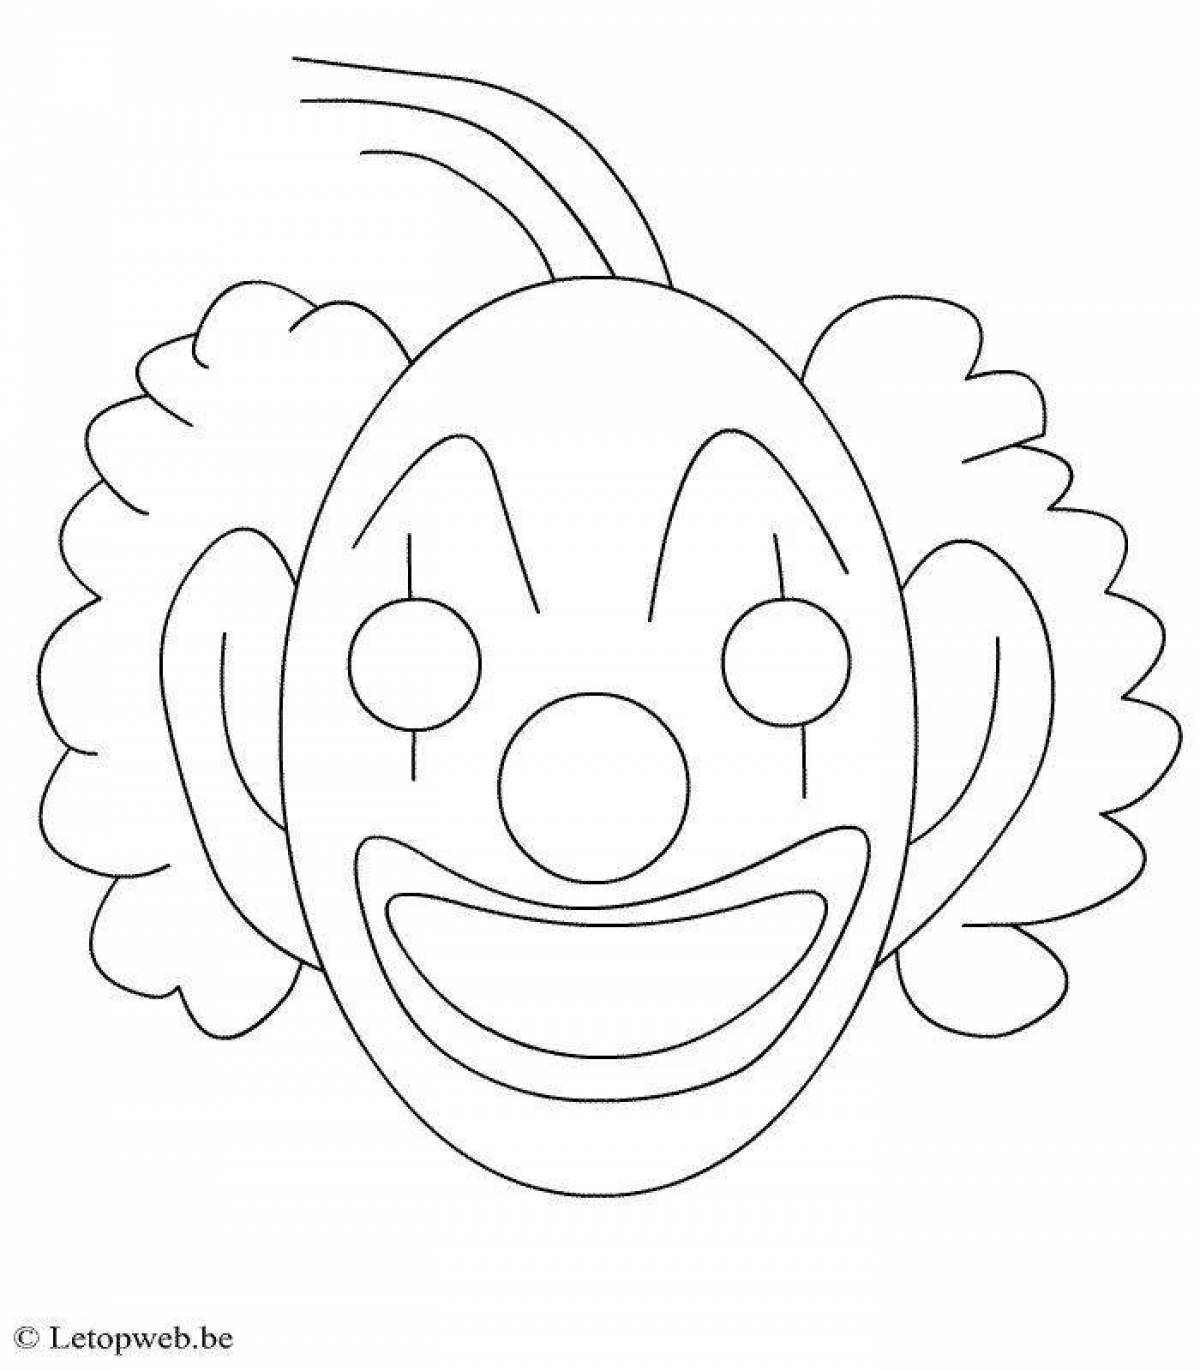 Забавная страница раскраски лица клоуна